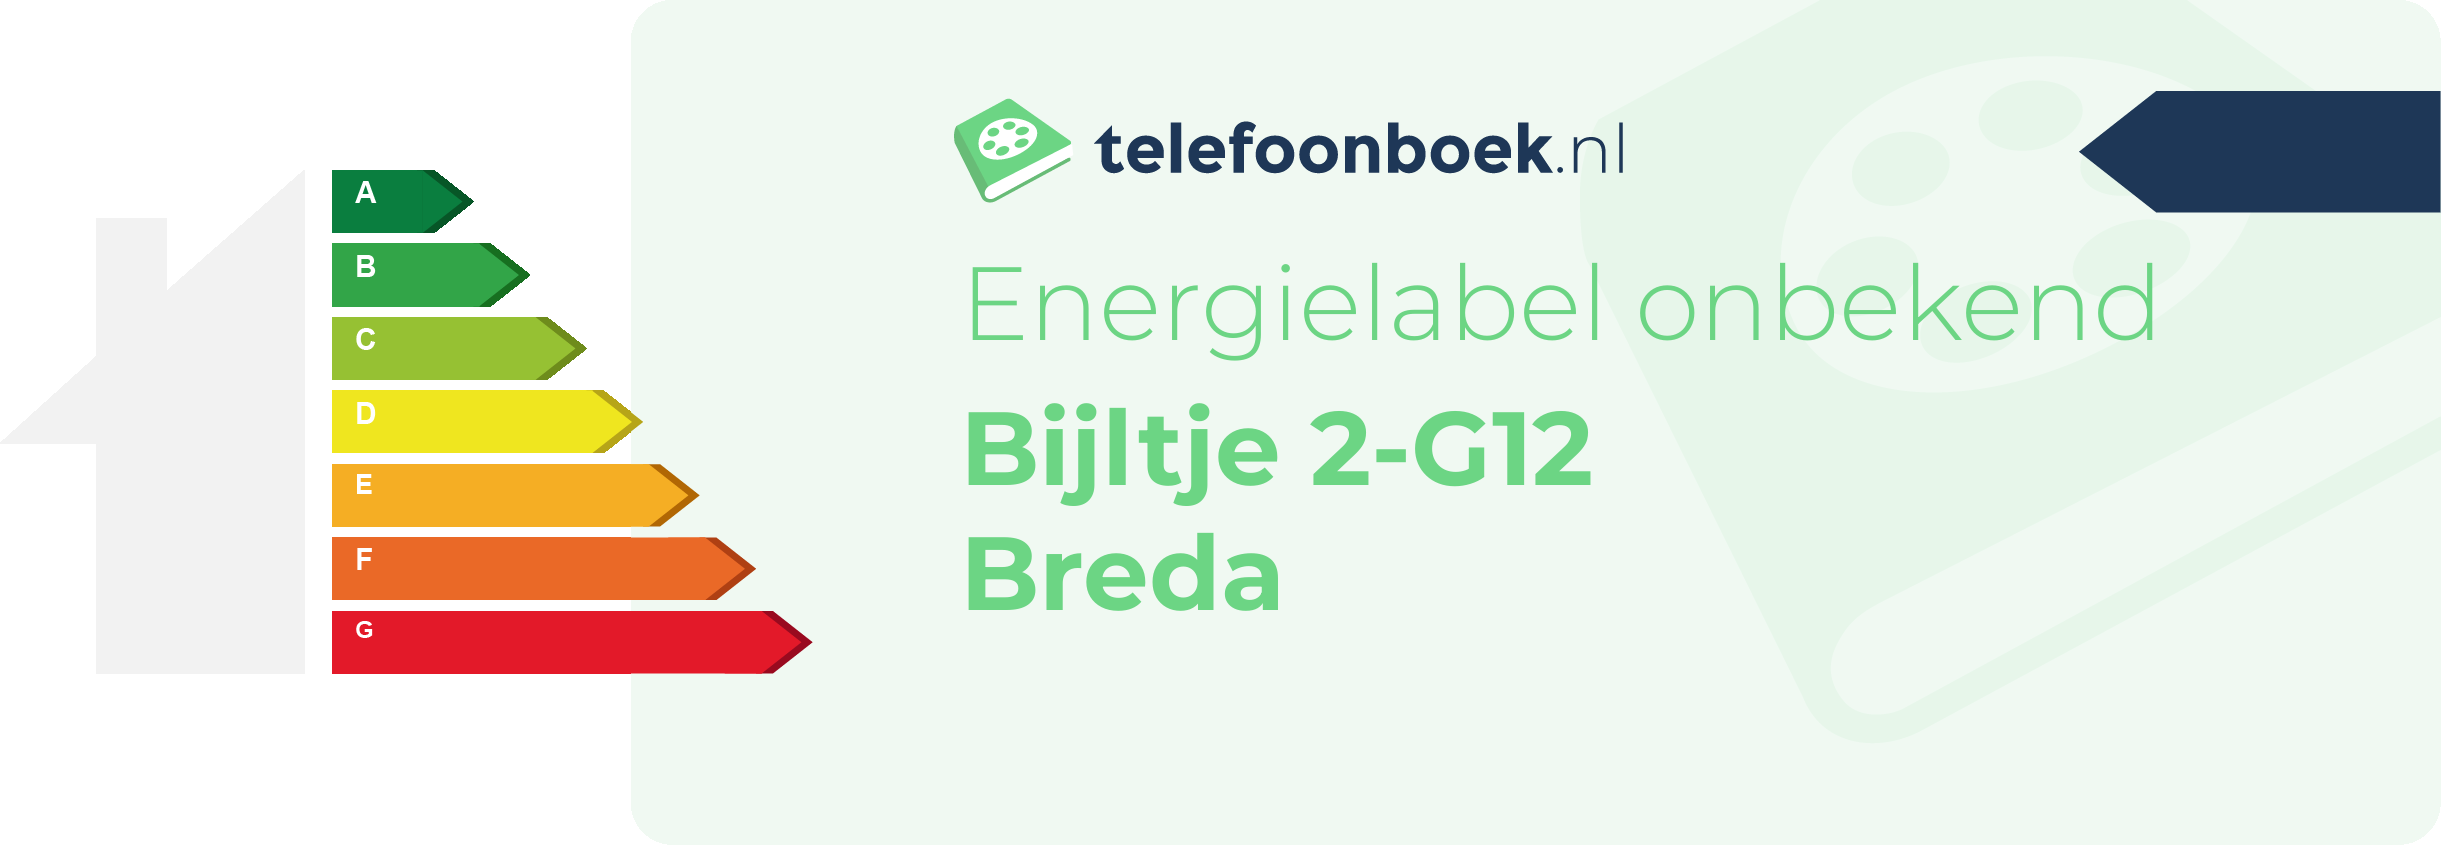 Energielabel Bijltje 2-G12 Breda